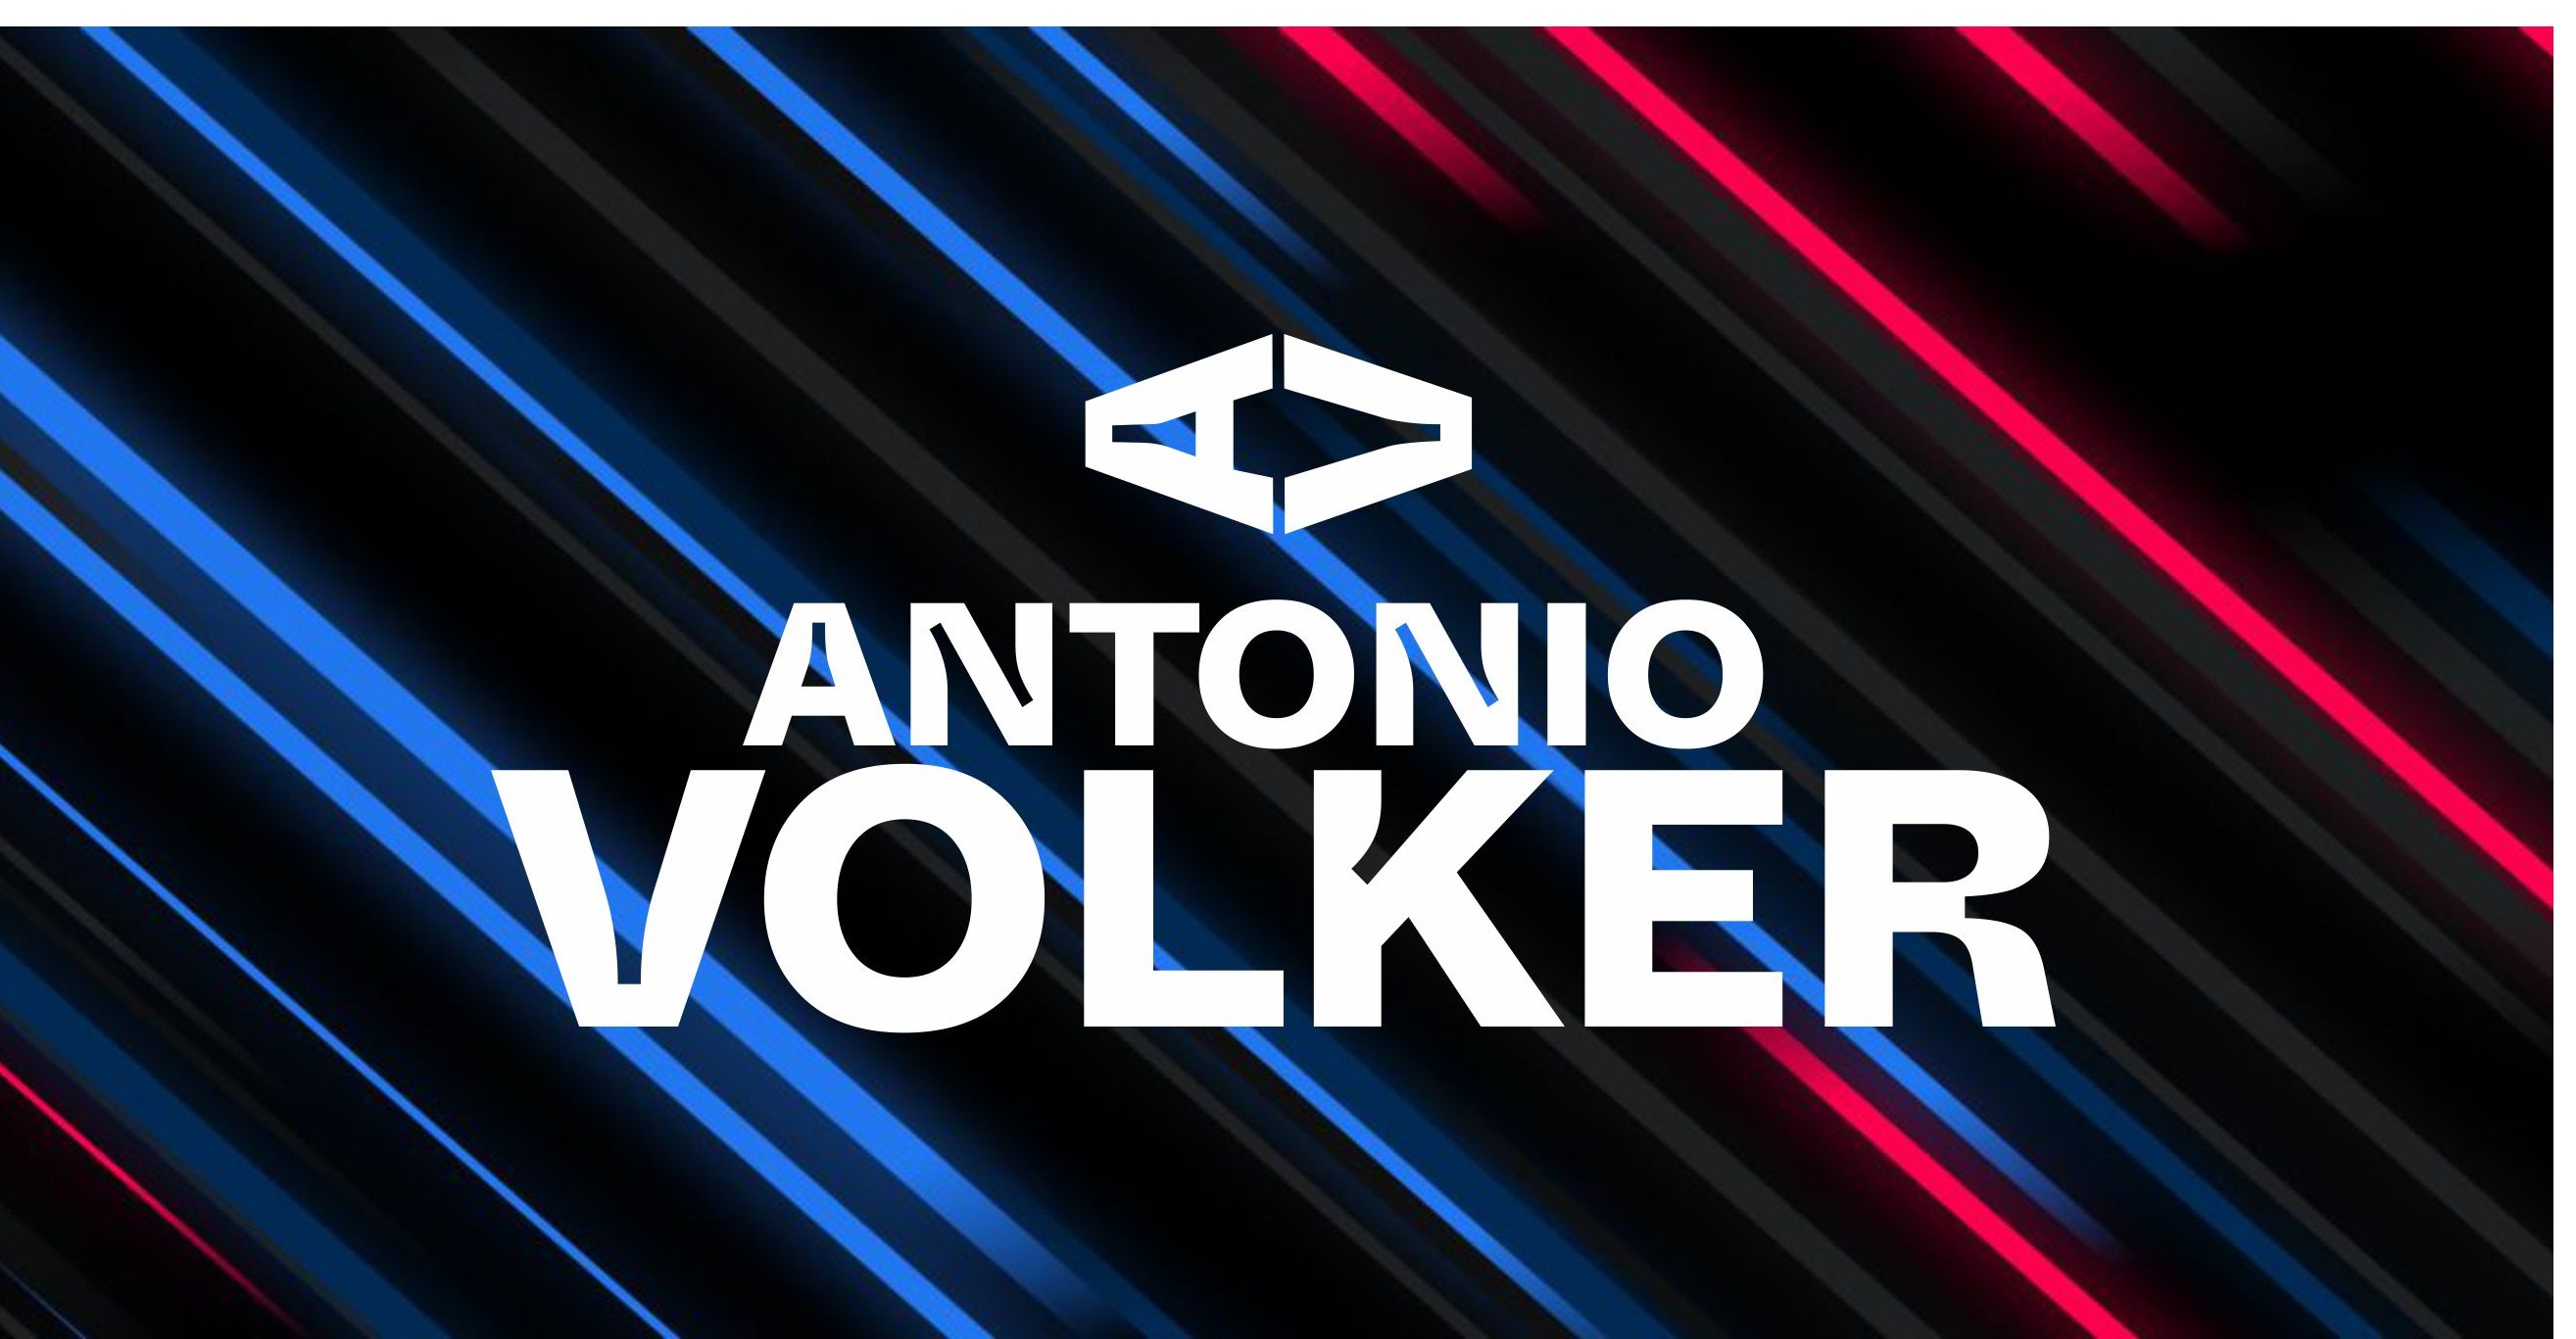 Antonio Volker